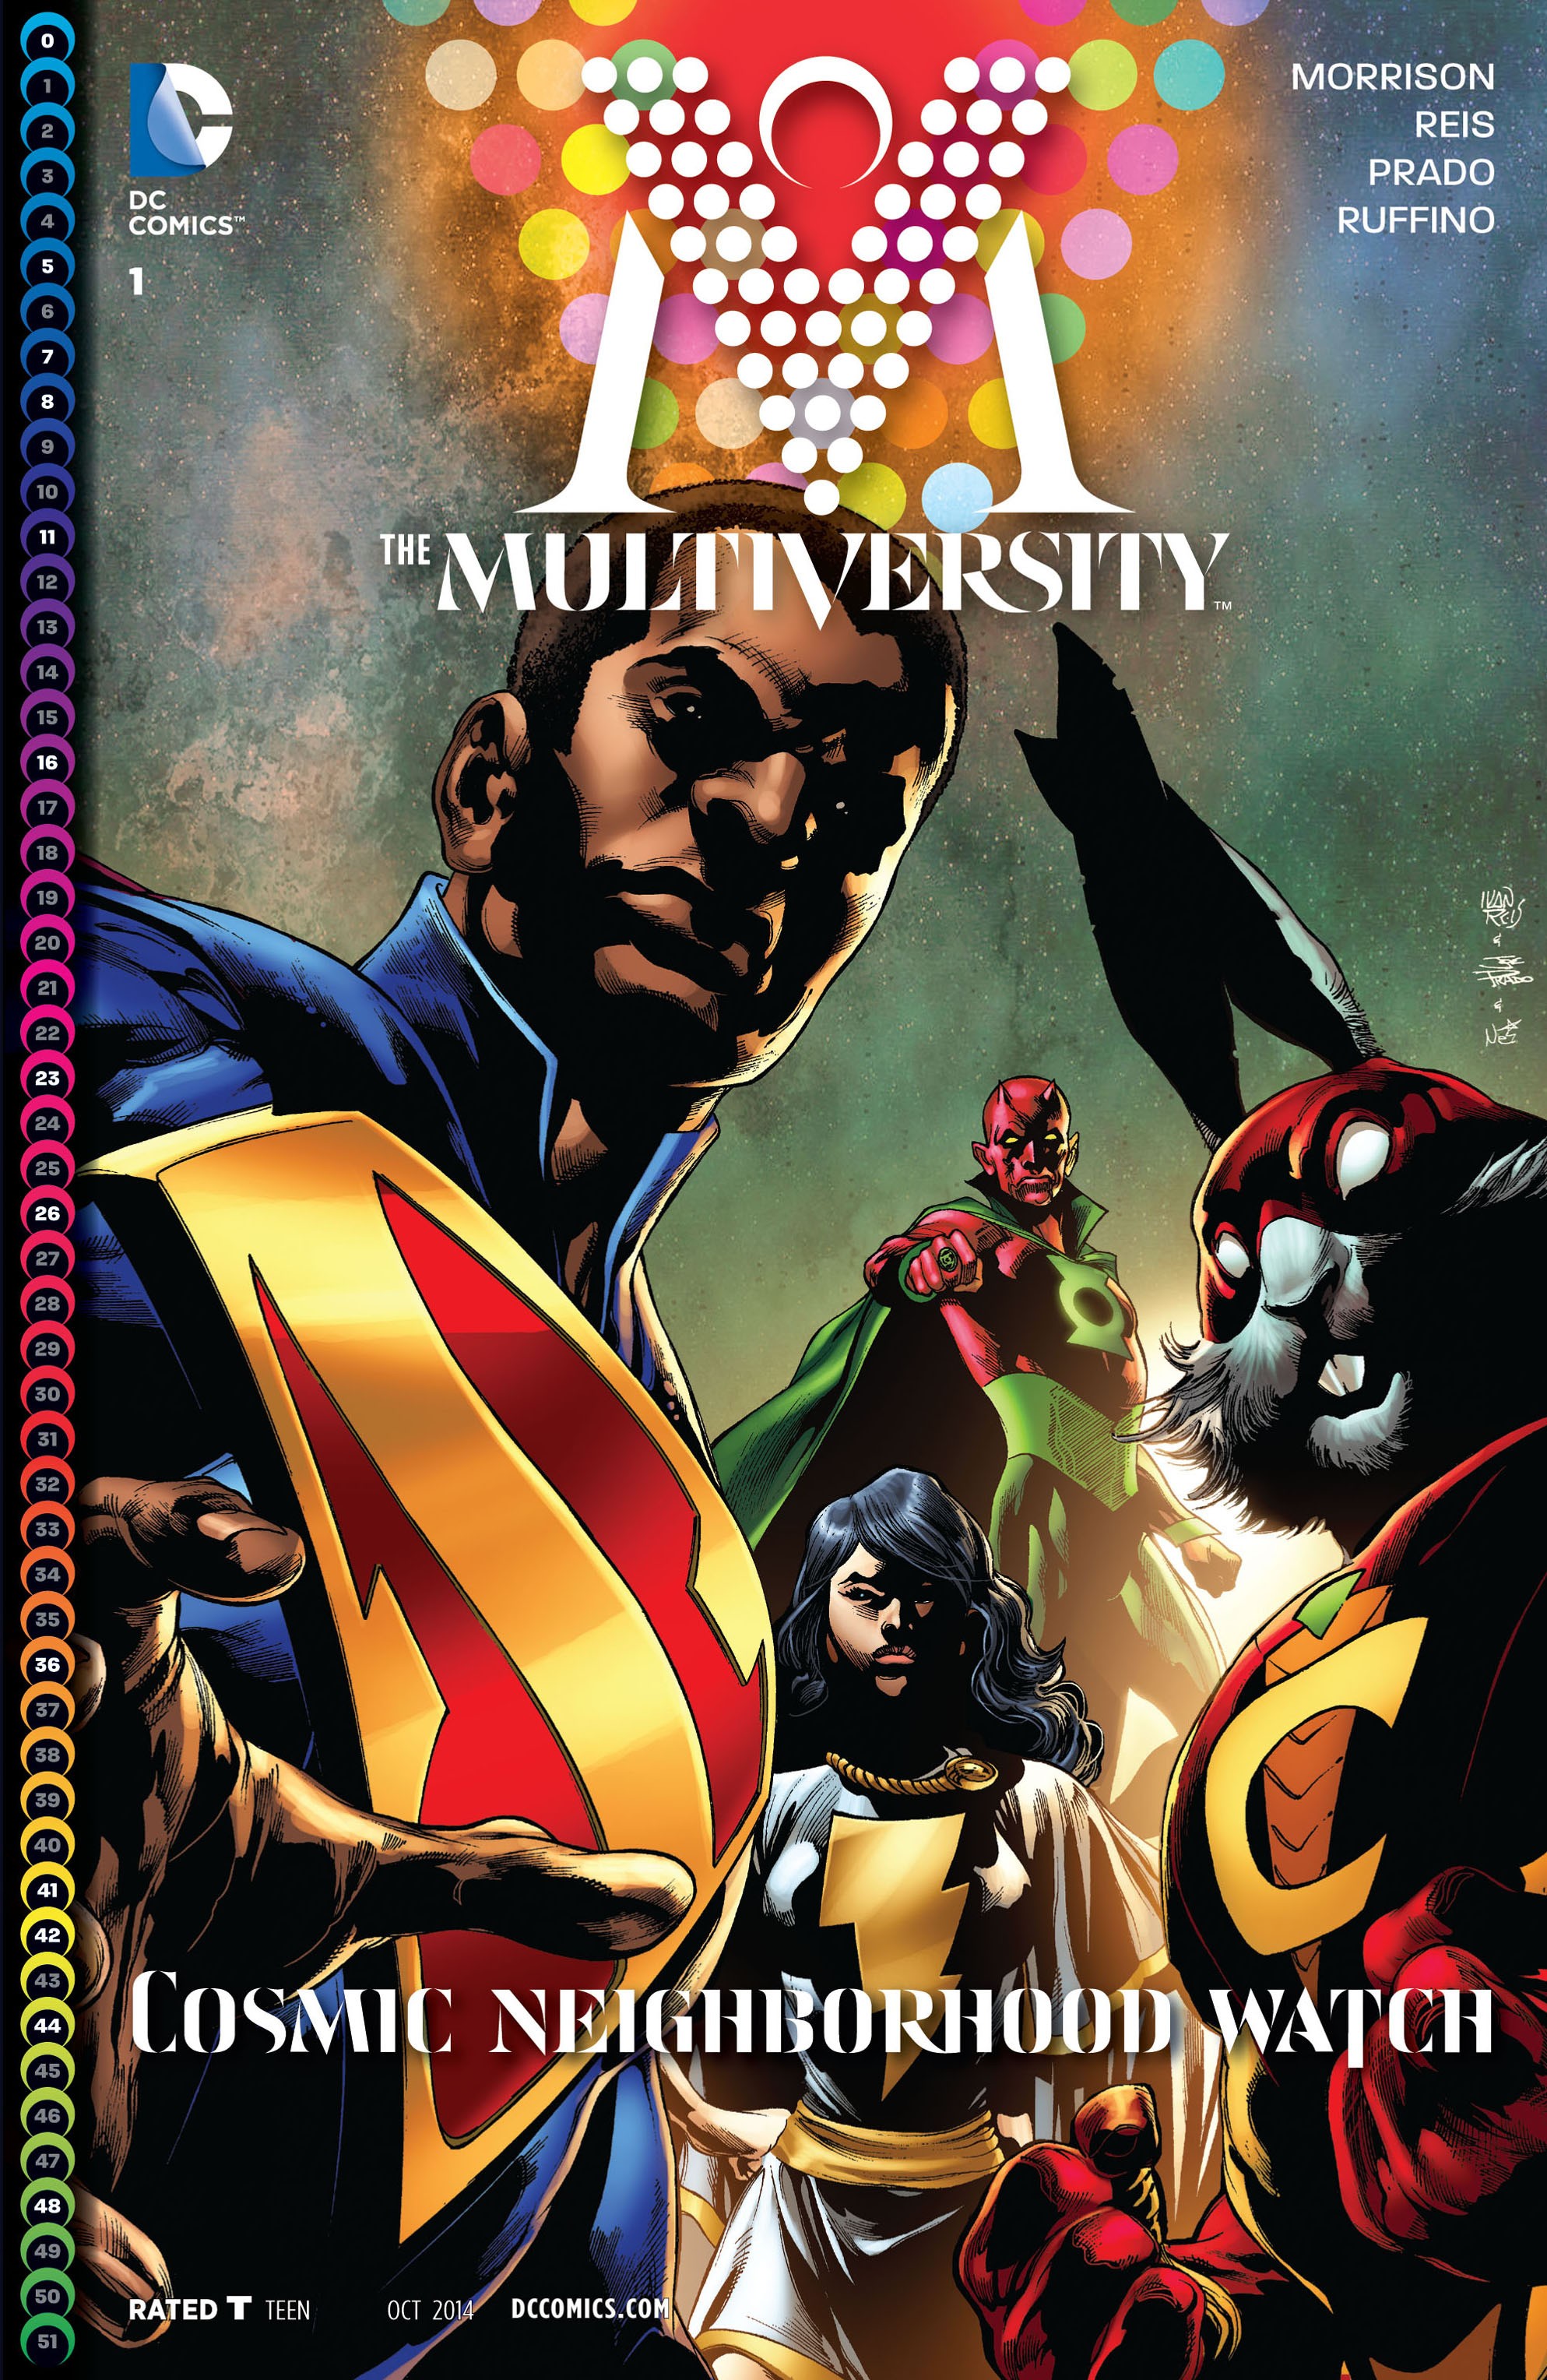 The Multiversity Vol. 1 #1